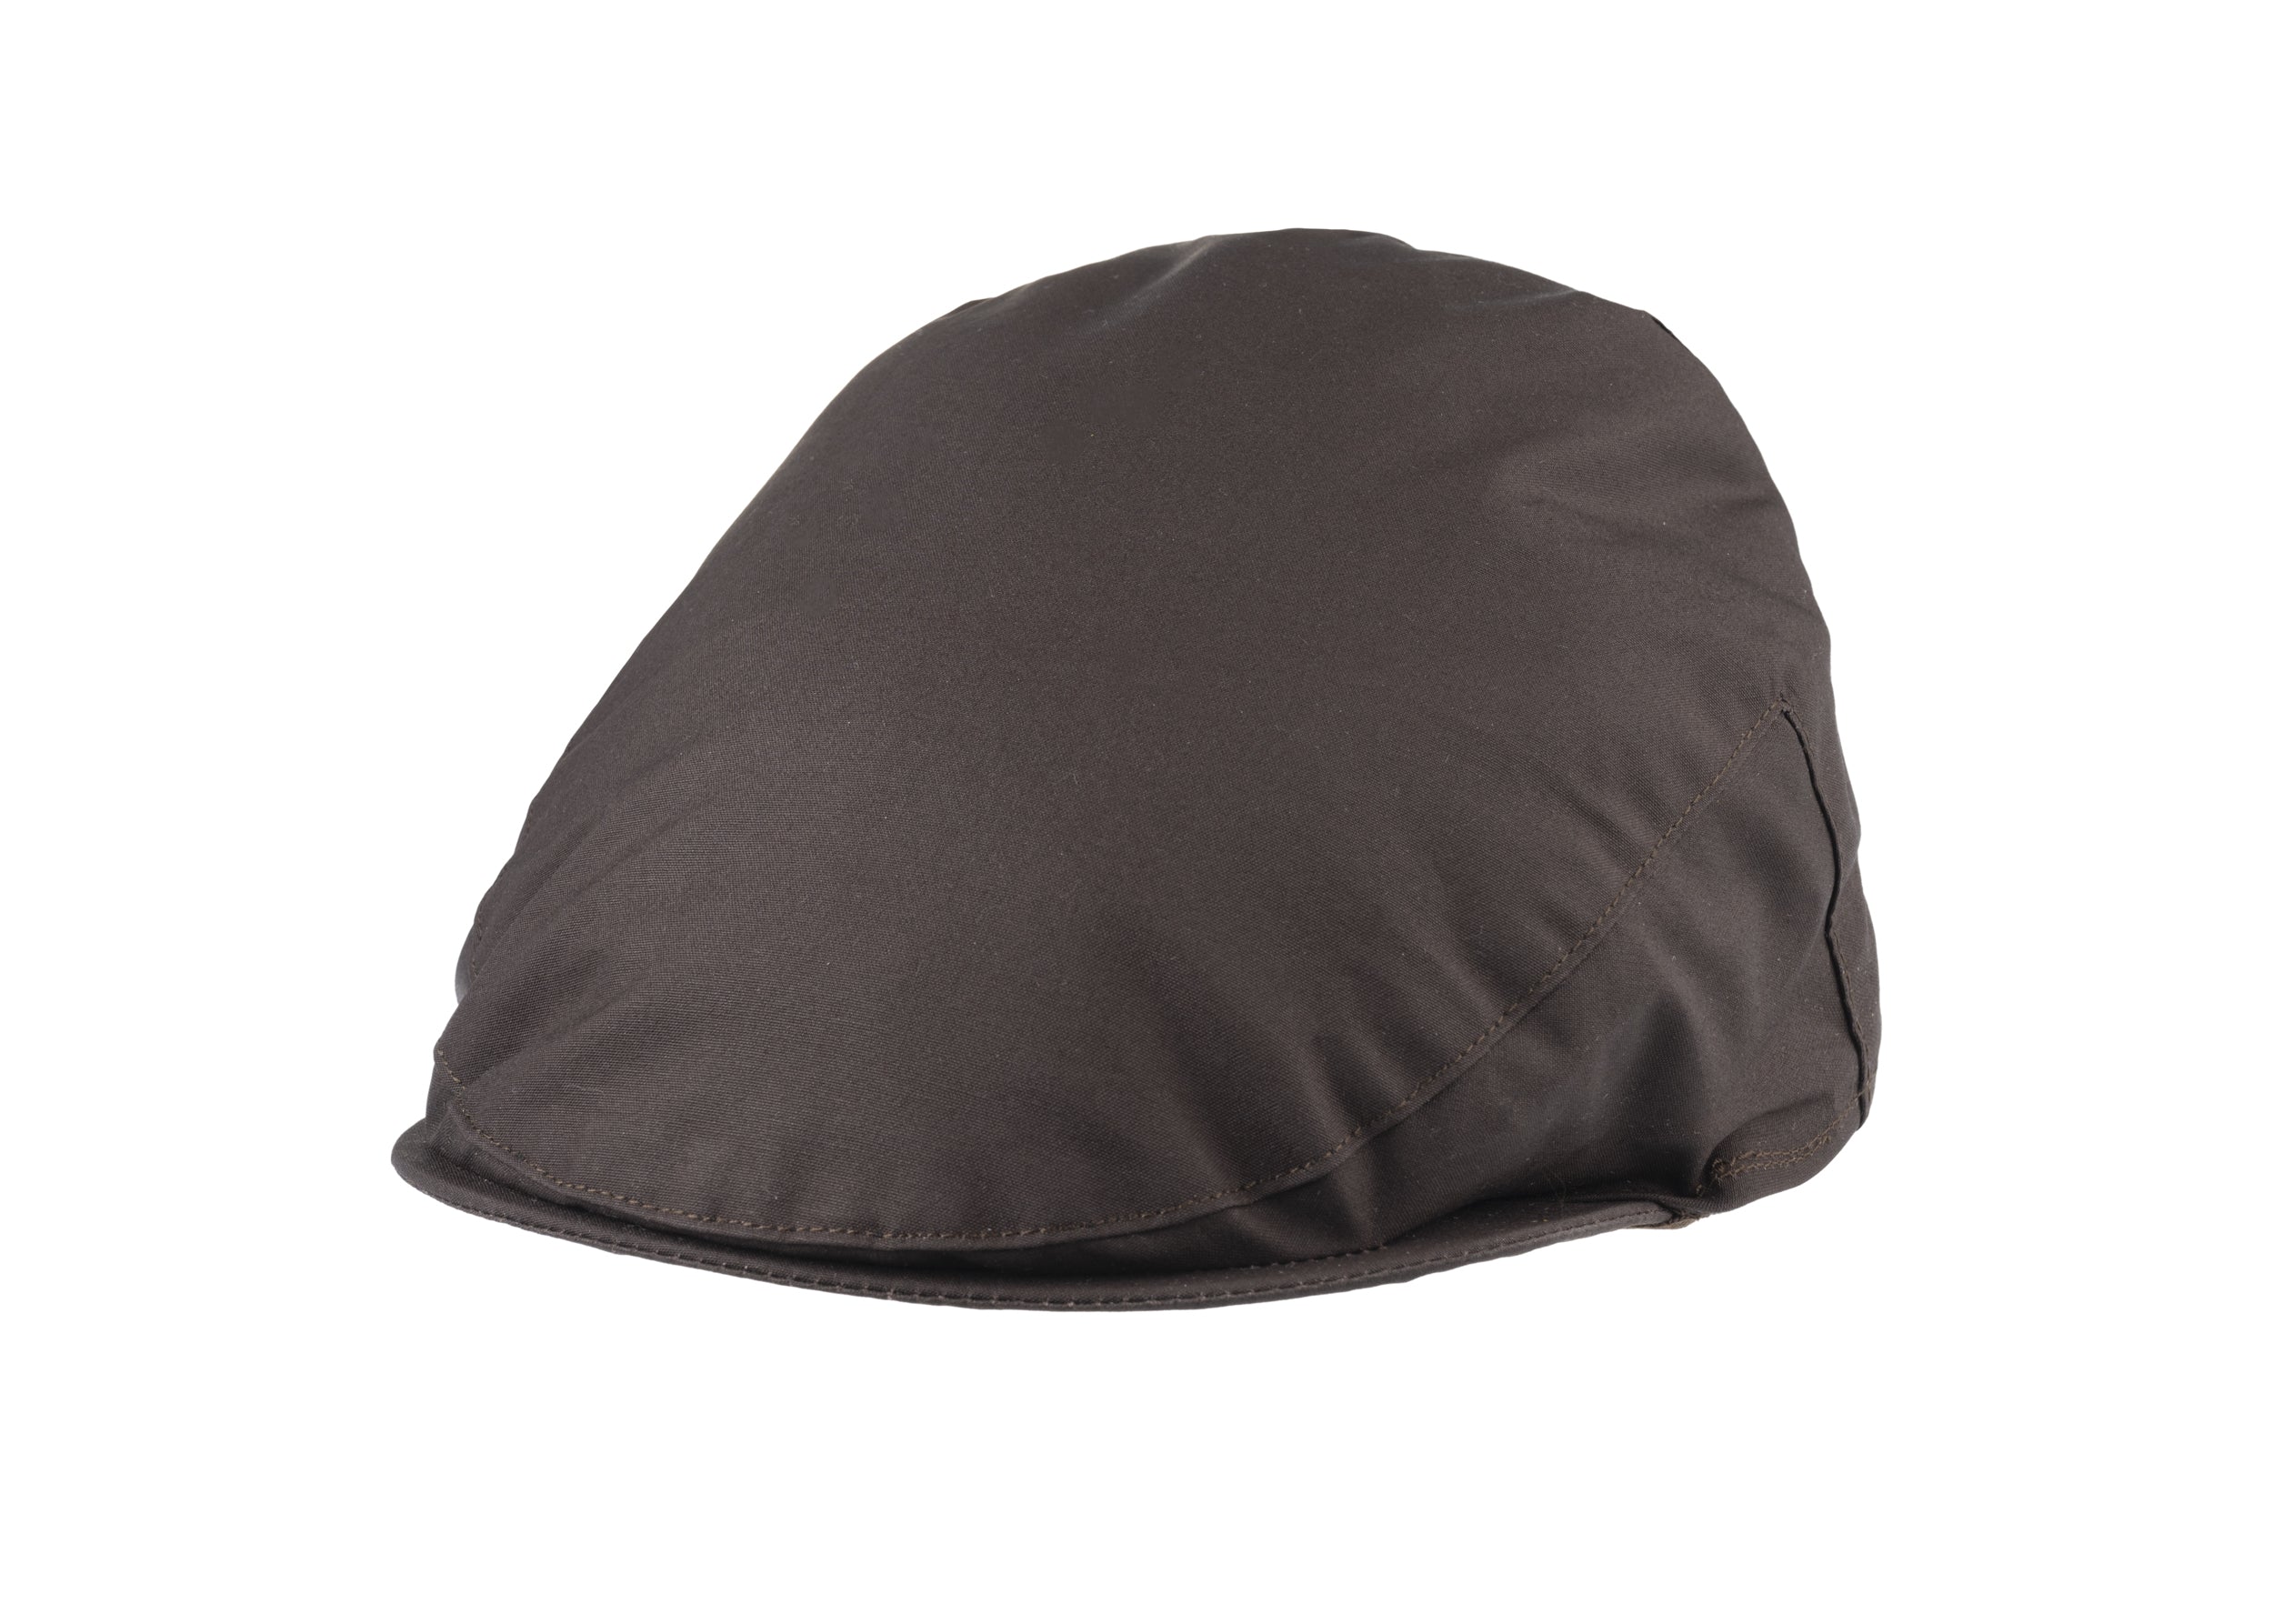 Balmoral flat Cap in cotton wax fabric in Brown